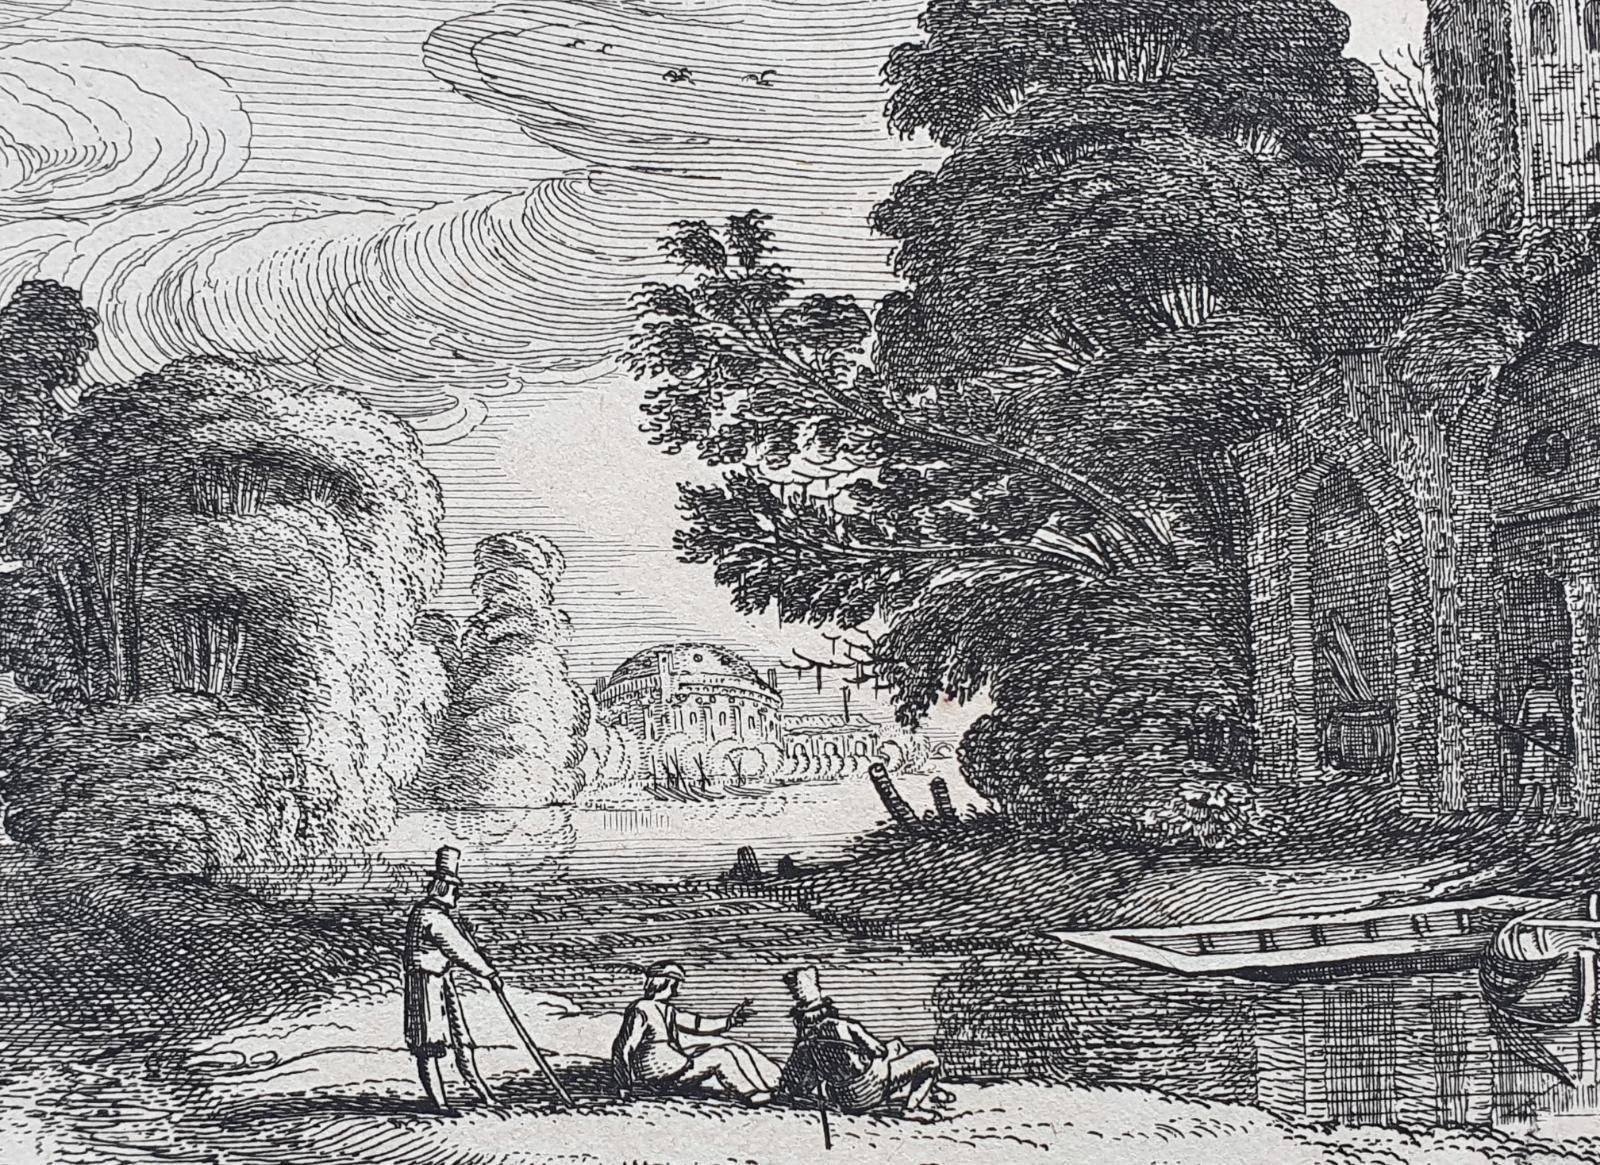 [Antique etching, ets, landscape print] J. v.d. Velde II, Figures by a castle lying by a river, published before 1713.